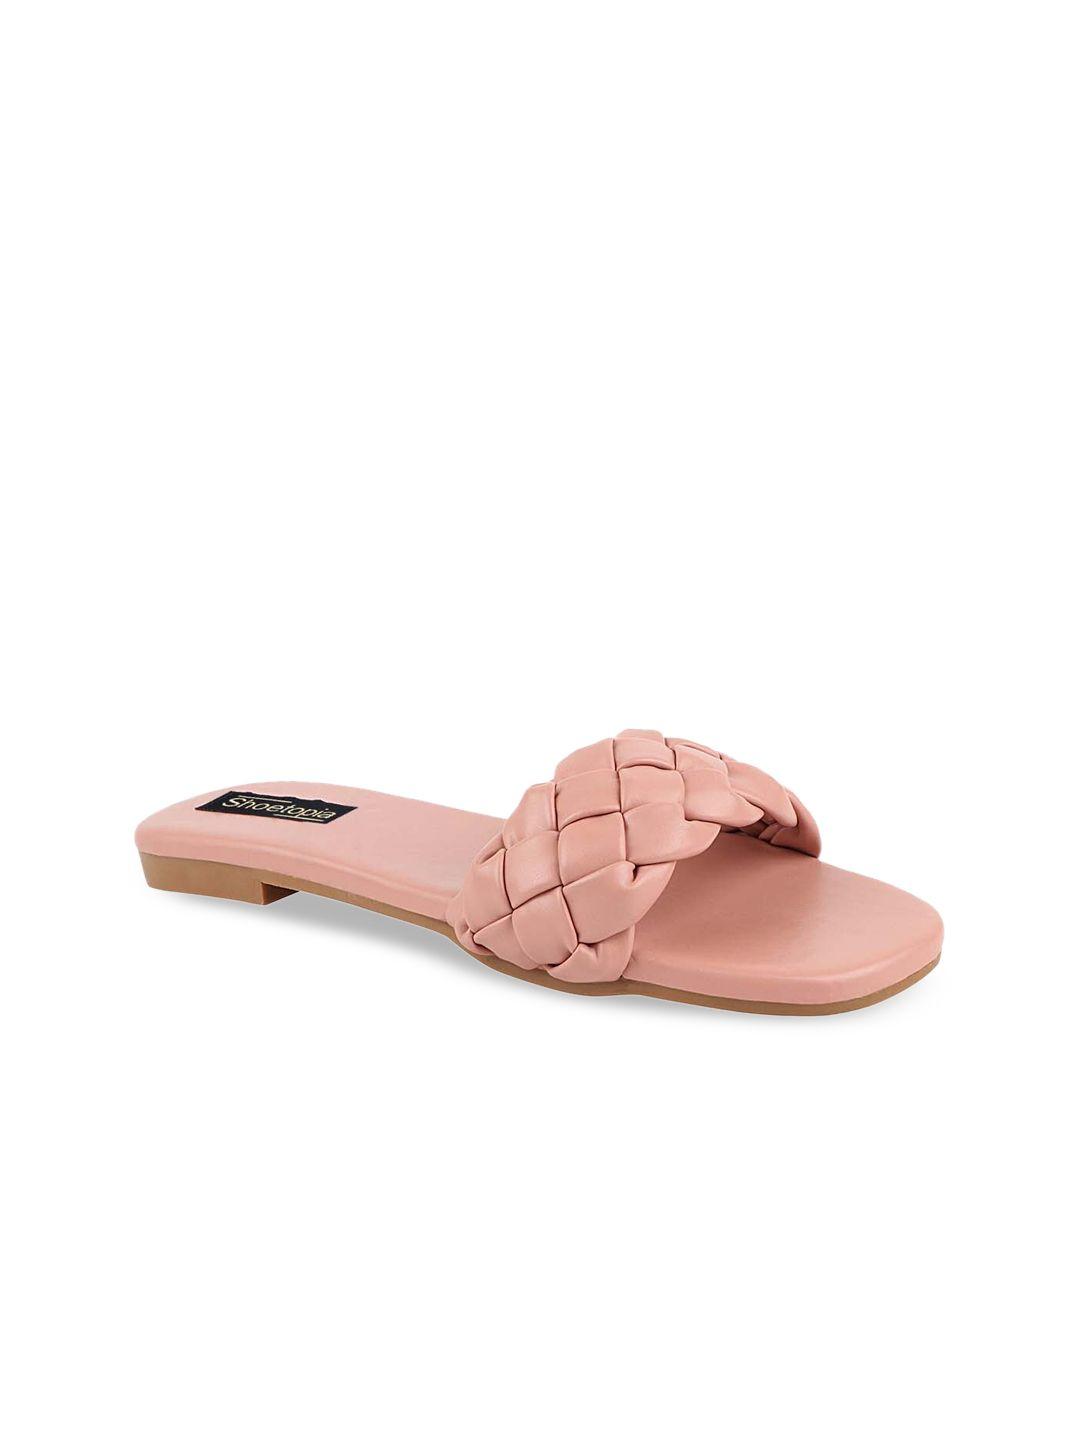 shoetopia-girls-peach-coloured-open-toe-flats